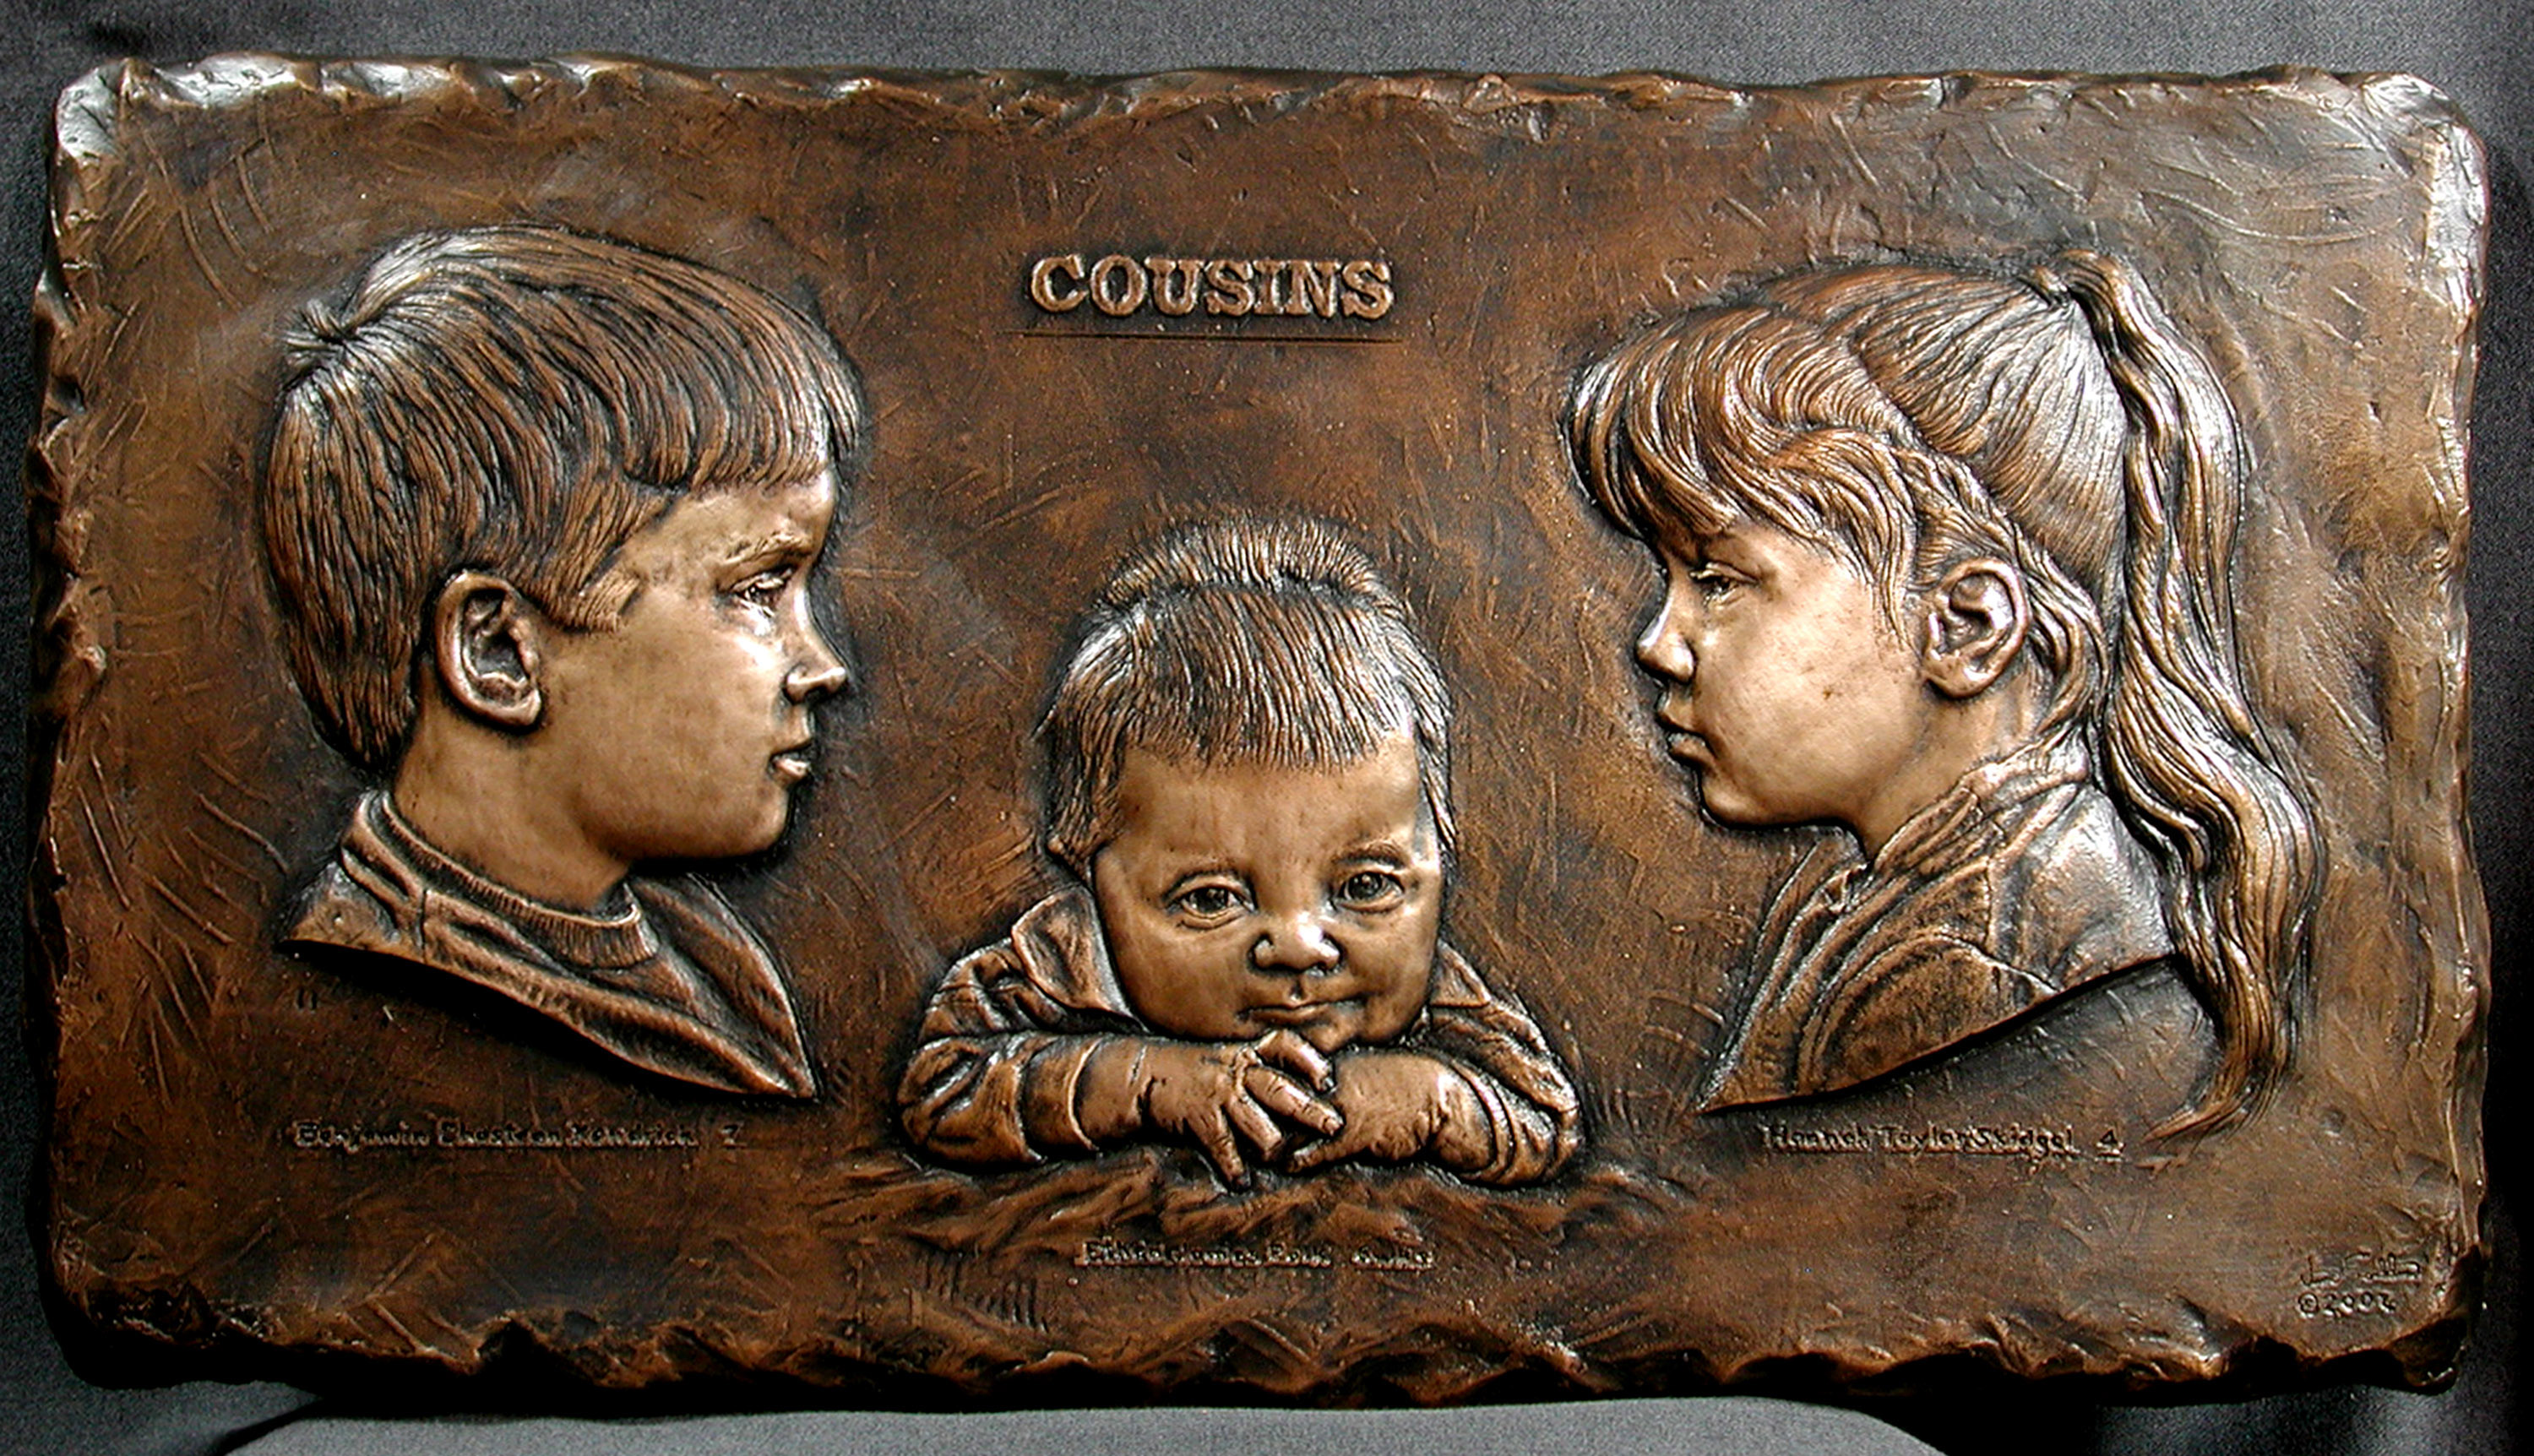 "Cousins" relief portrait of artists grandchildren